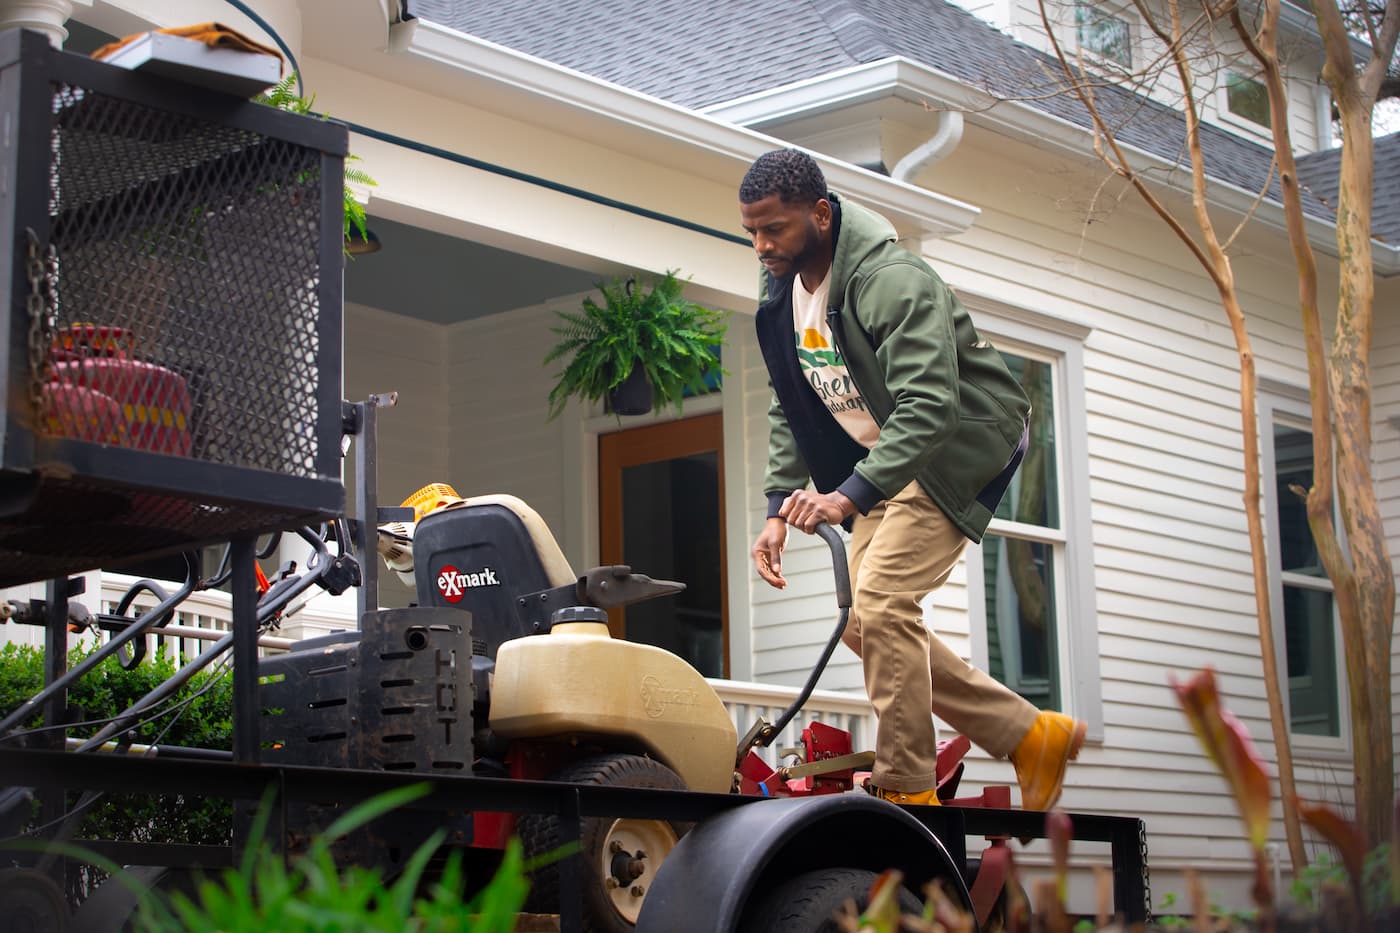 Landscaper unloading riding lawn mower